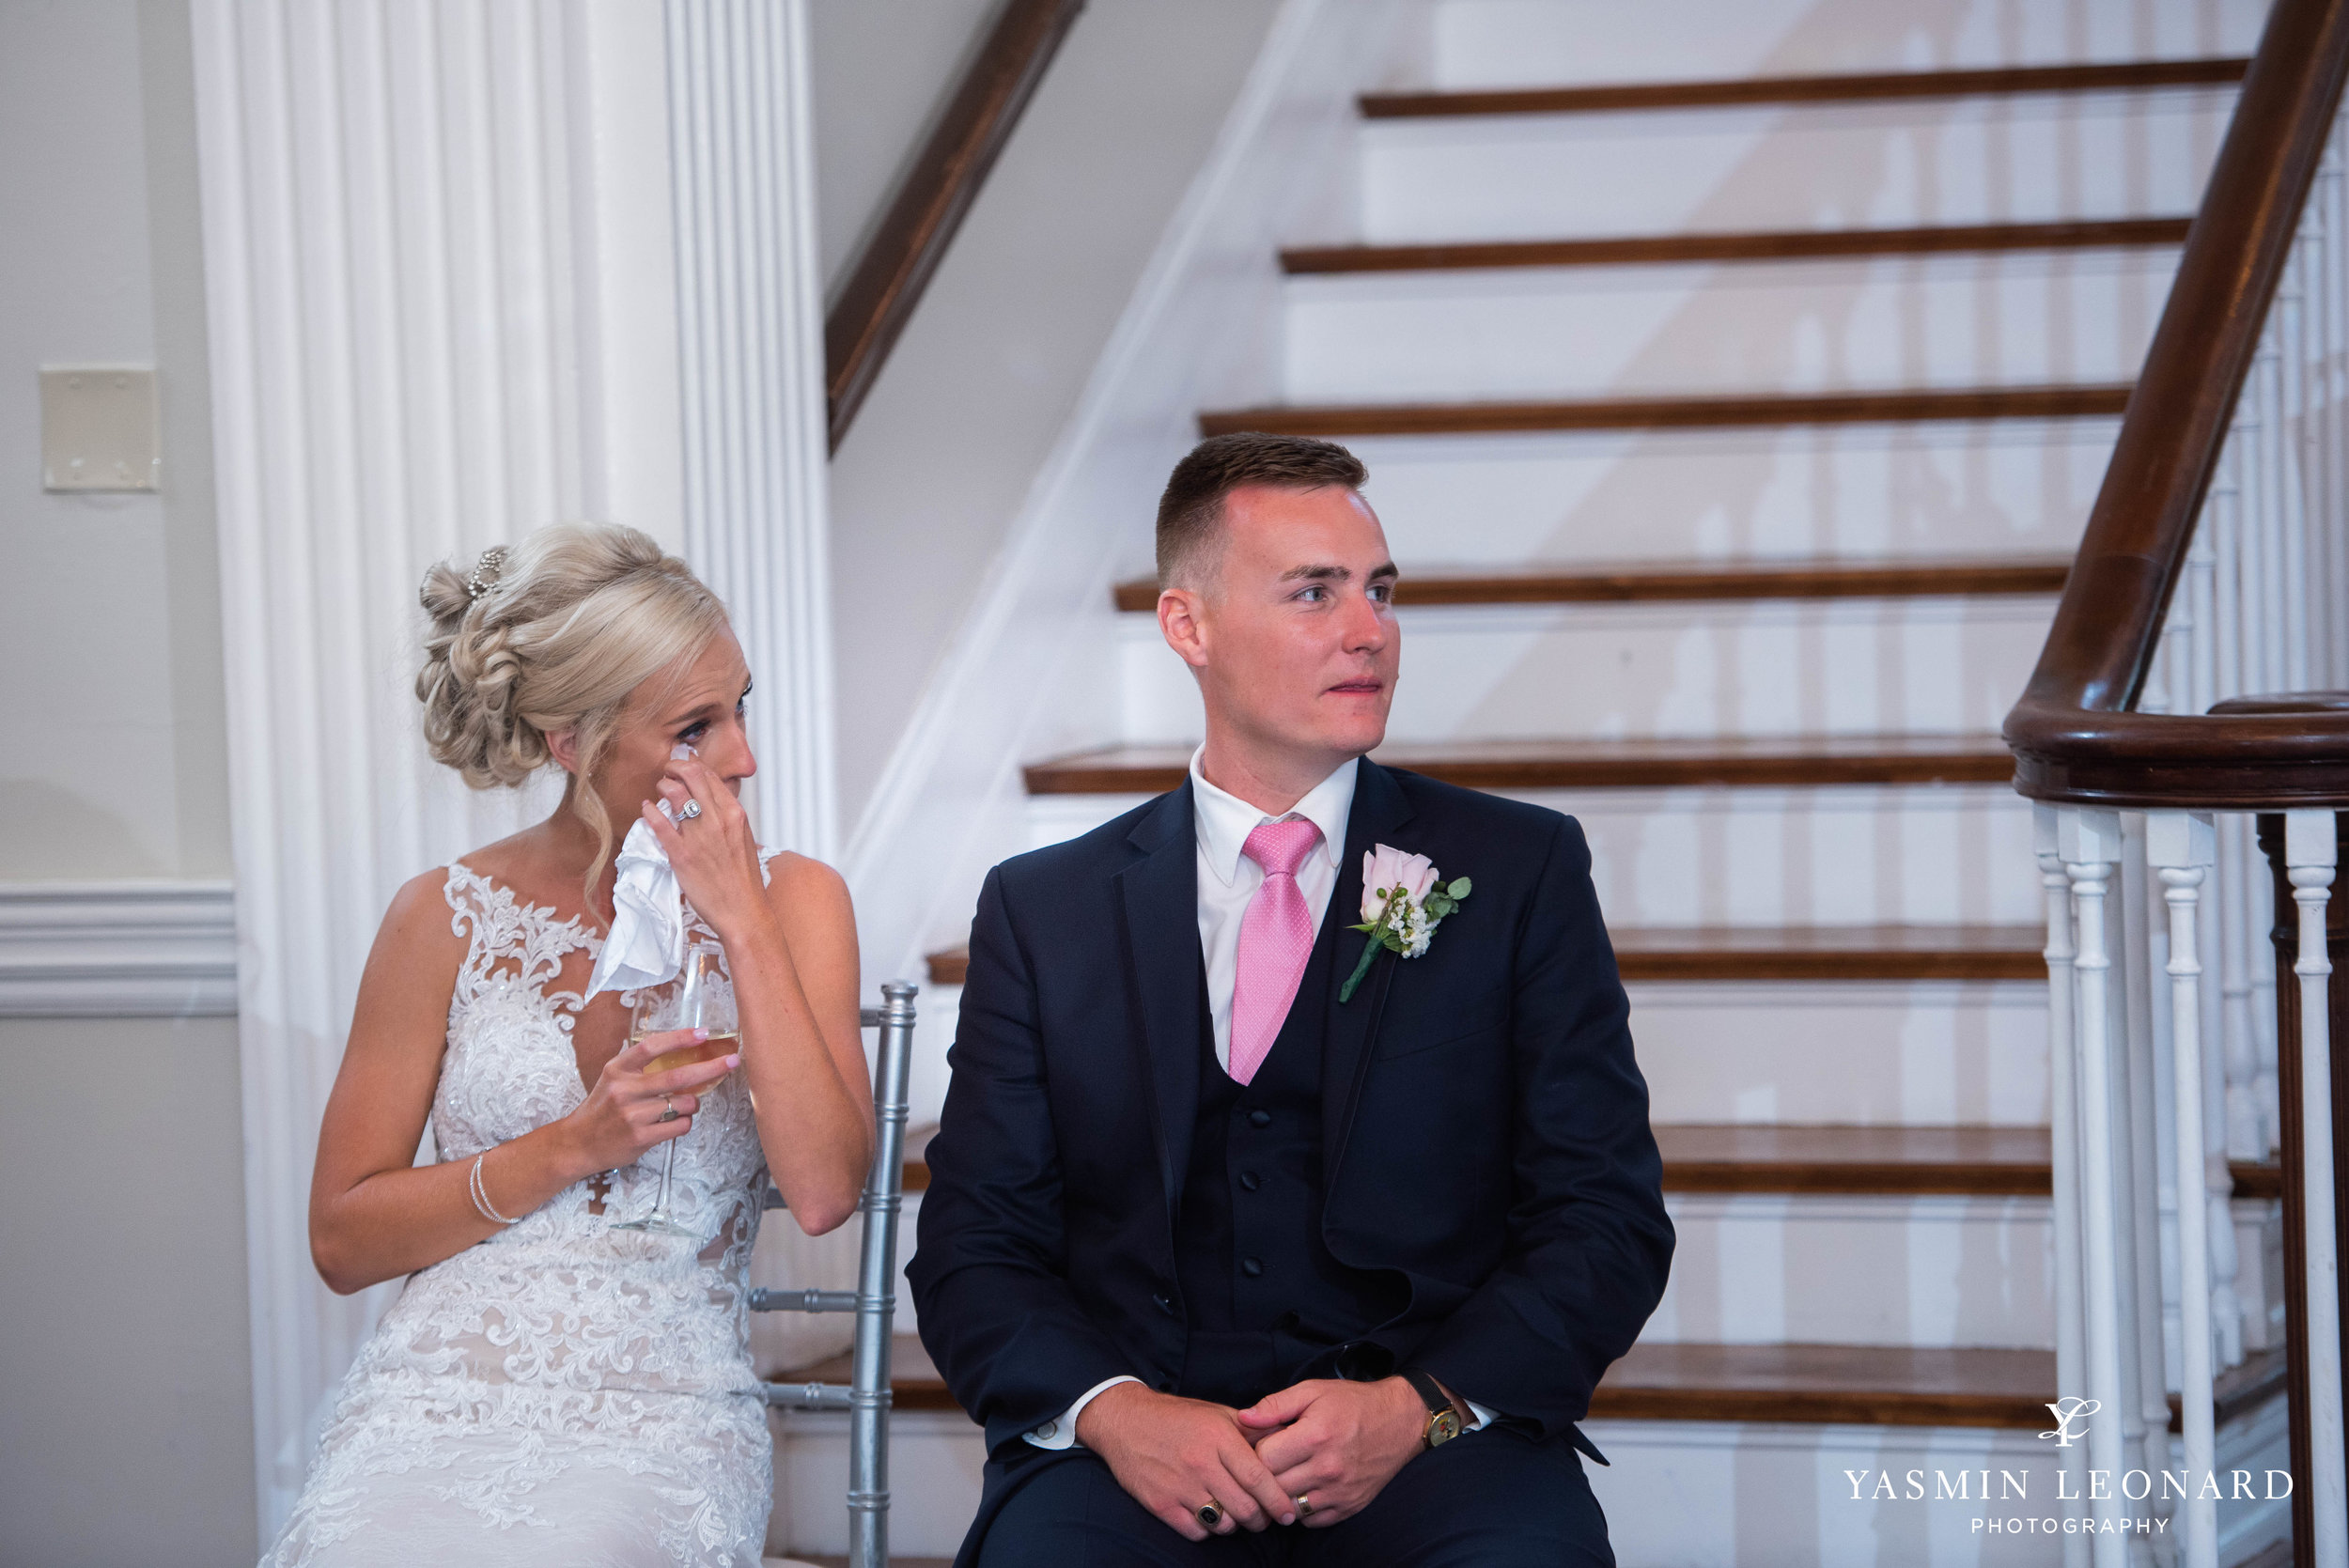 Separk Mansion - NC Weddings - Gastonia Wedding - NC Wedding Venues - Pink and Blue Wedding Ideas - Pink Bridesmaid Dresses - Yasmin Leonard Photography-49.jpg